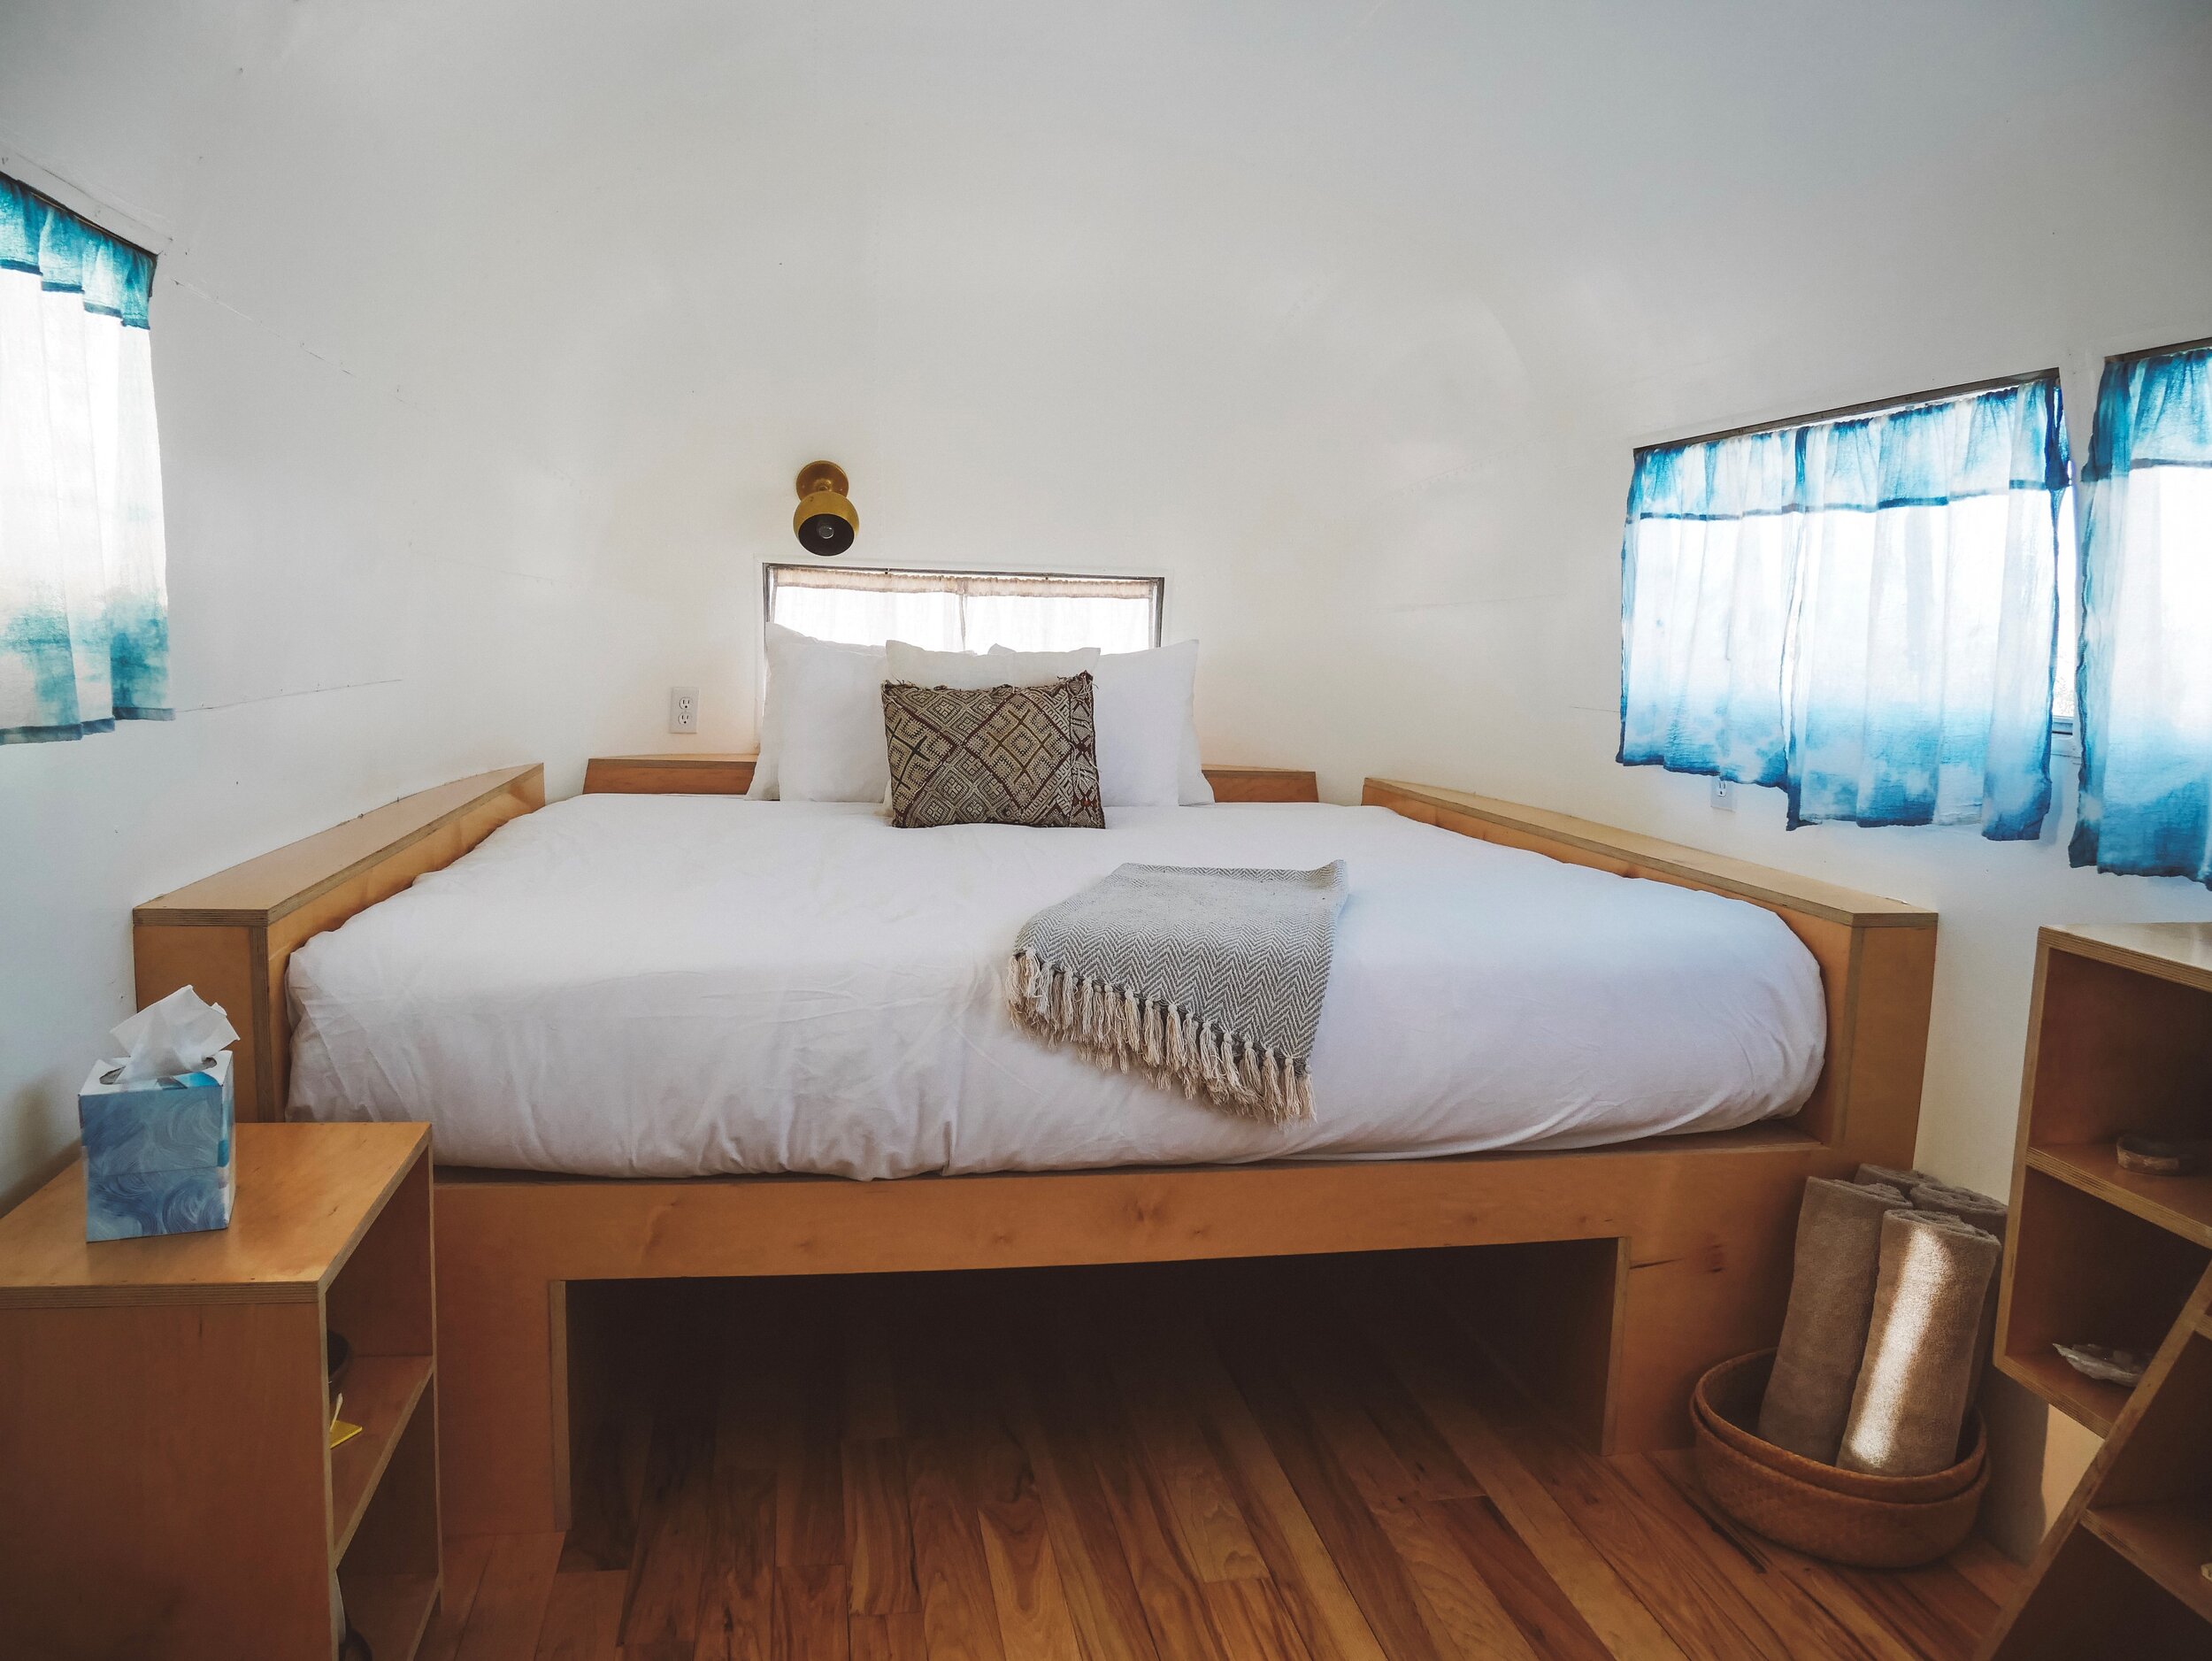 Private Bedroom in Airstream - Joshua Tree - California - United States (USA)